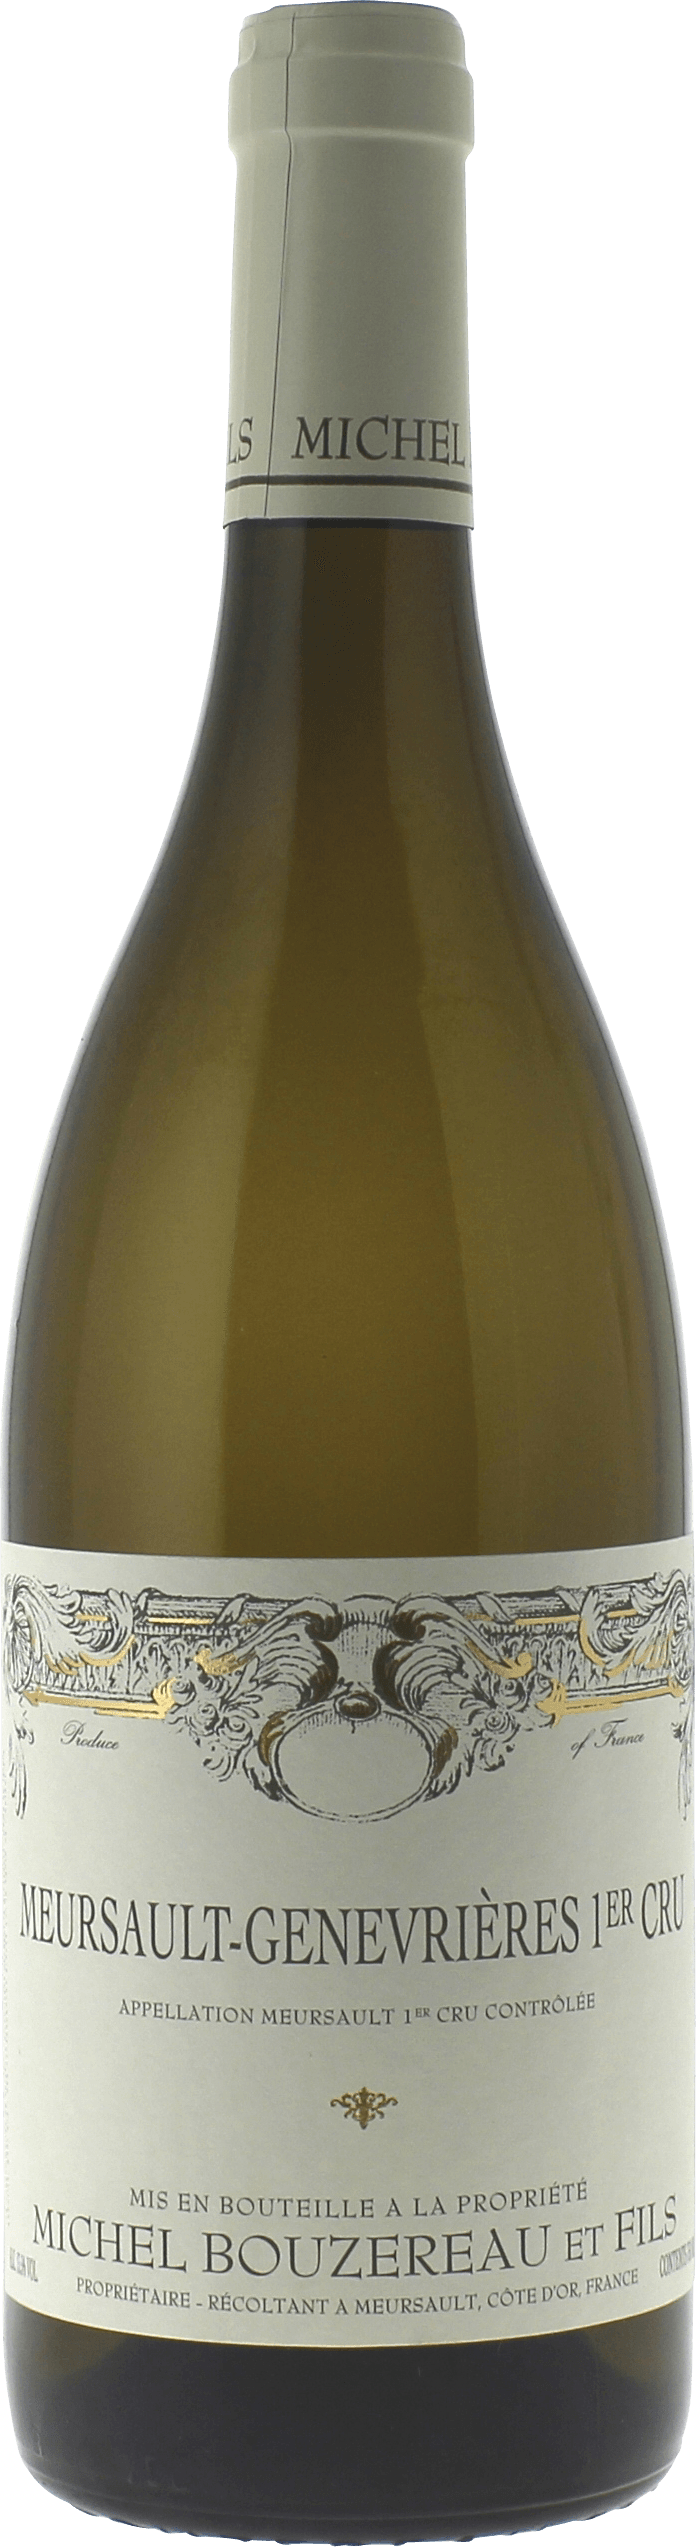 Meursault genevrires 1er cru 2016 Domaine BOUZEREAU Michel et fils, Bourgogne blanc